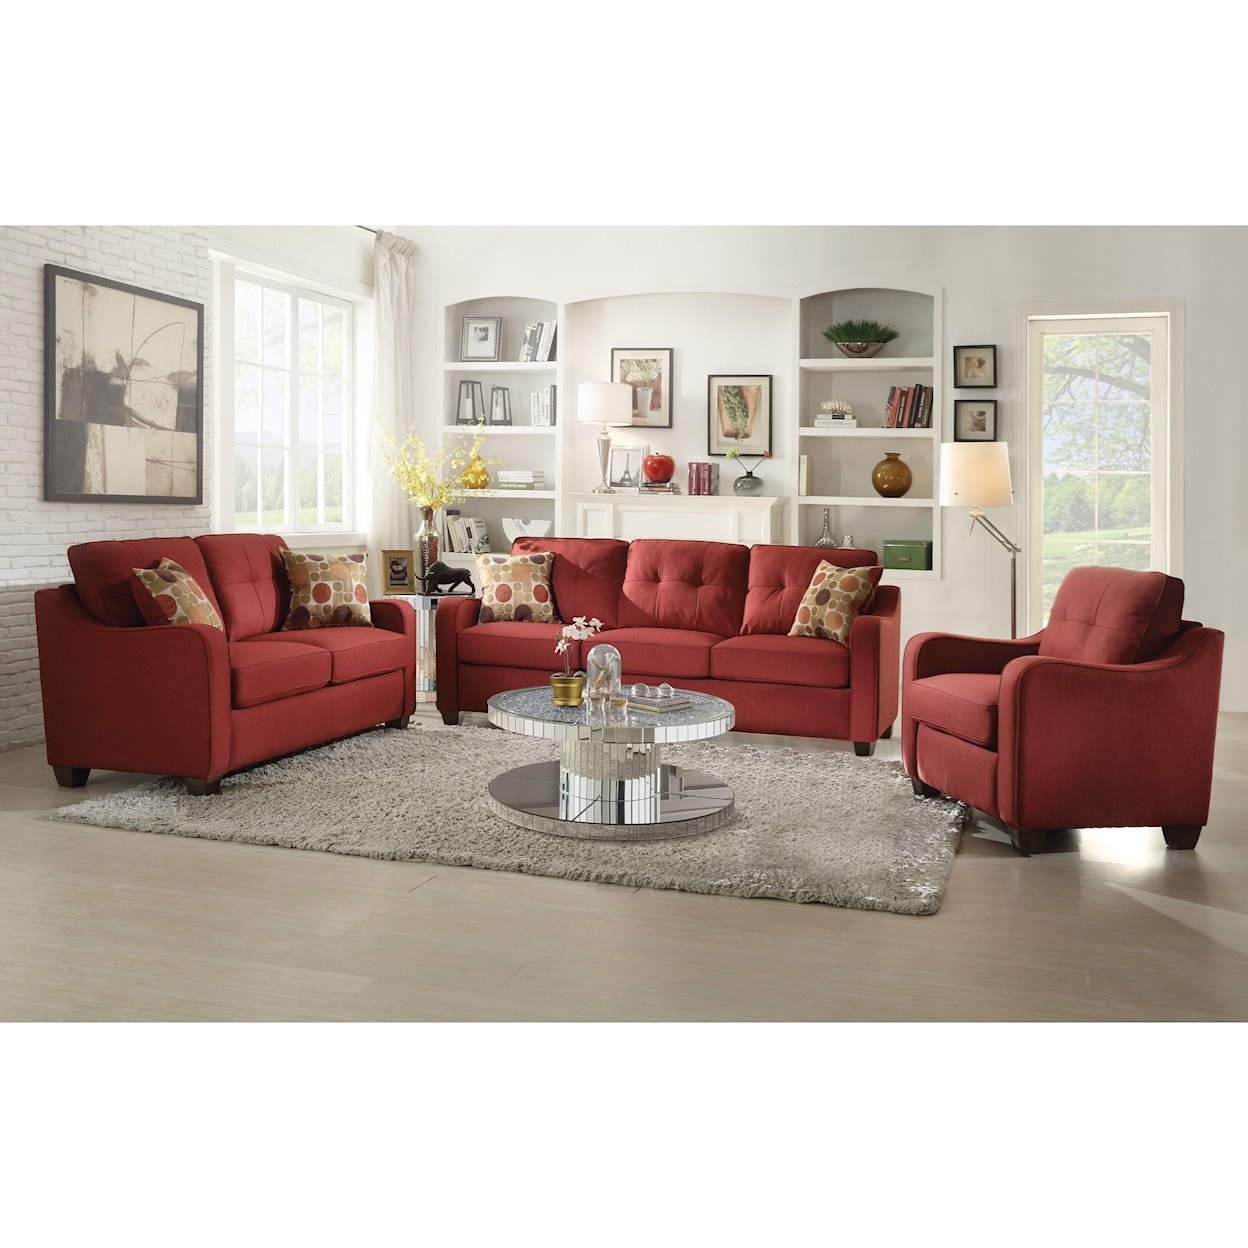 Acme Furniture Cleavon II Sofa w/2 Pillows